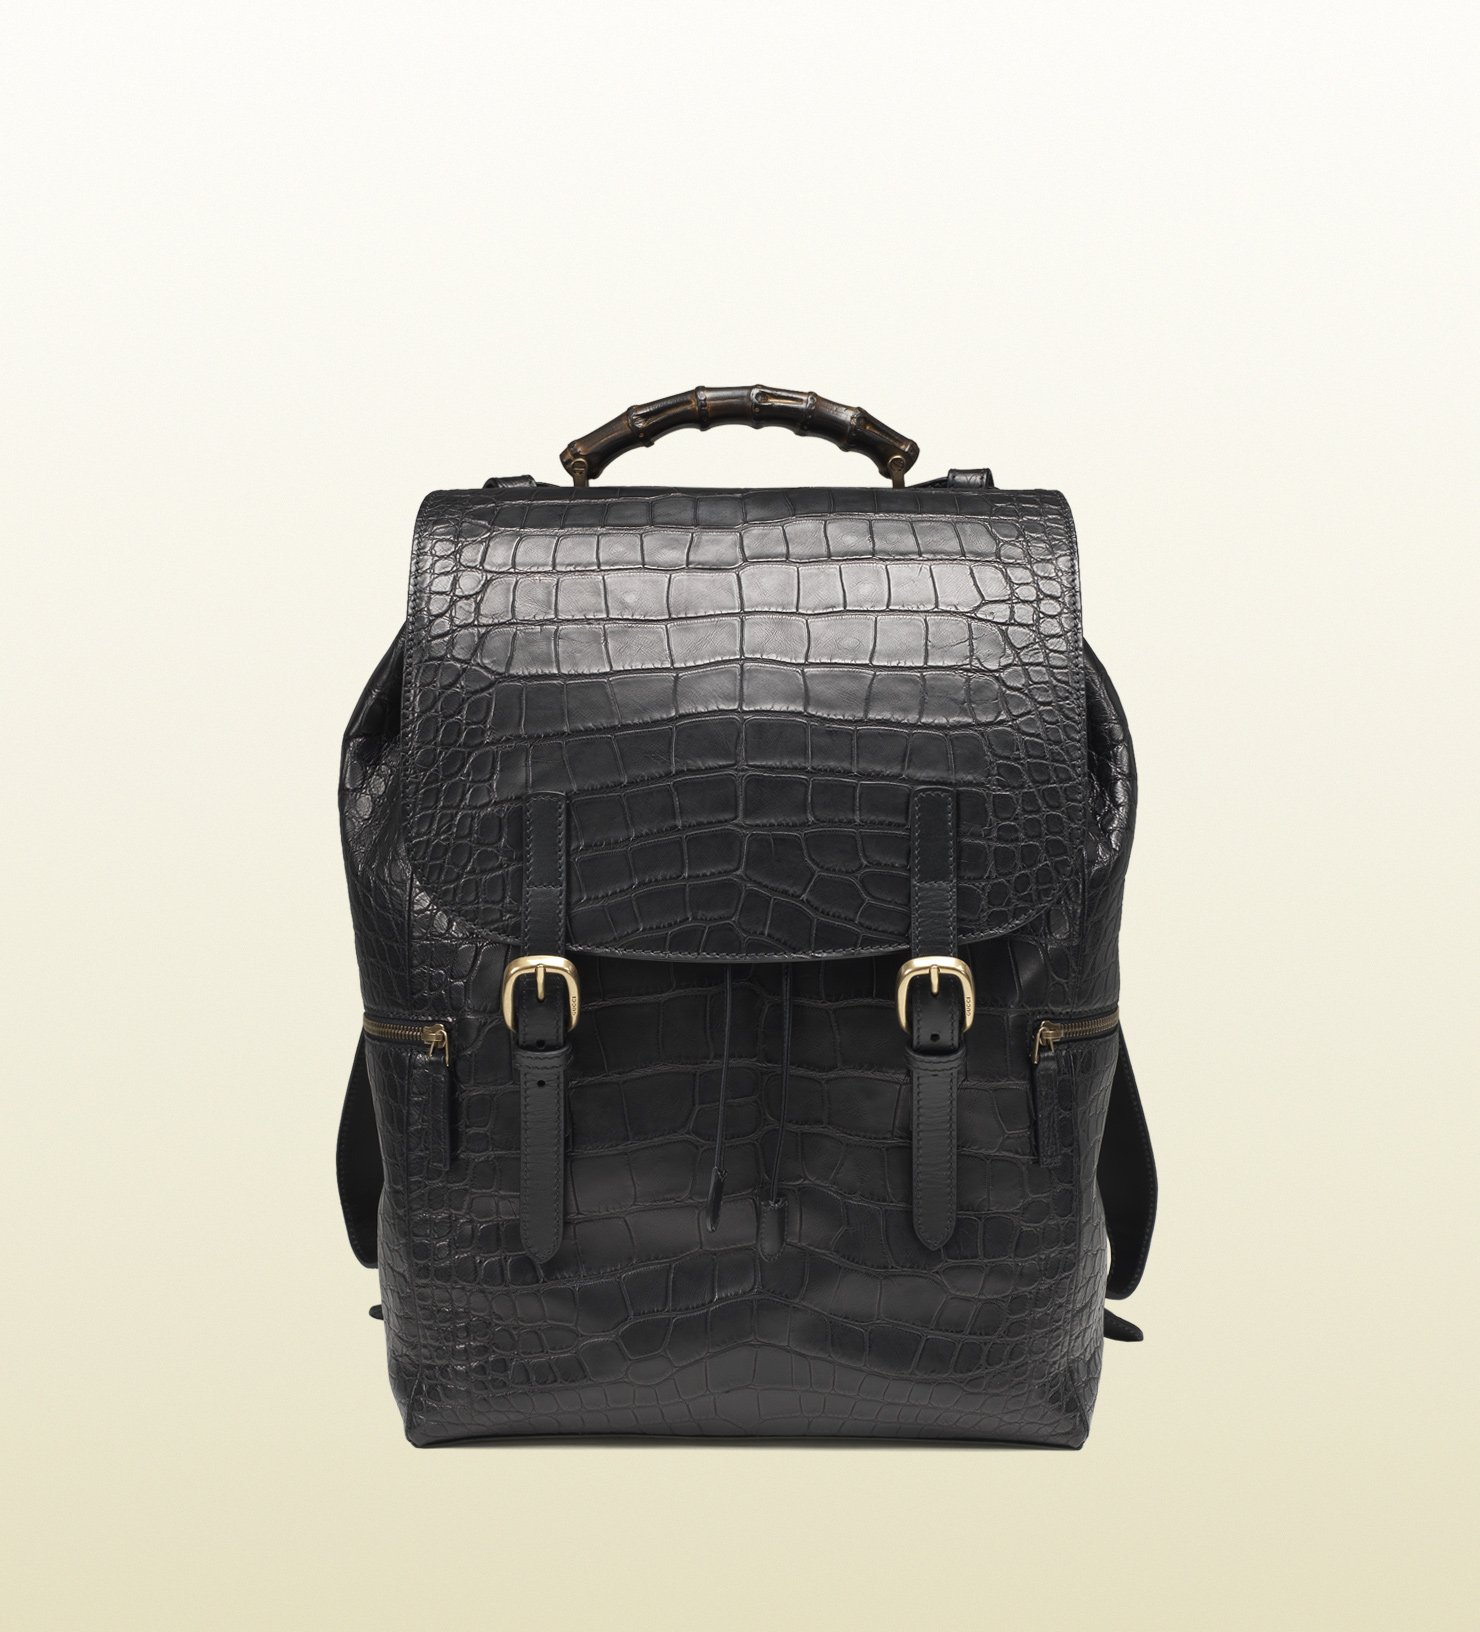 Lyst - Gucci Black Crocodile Backpack in Black for Men